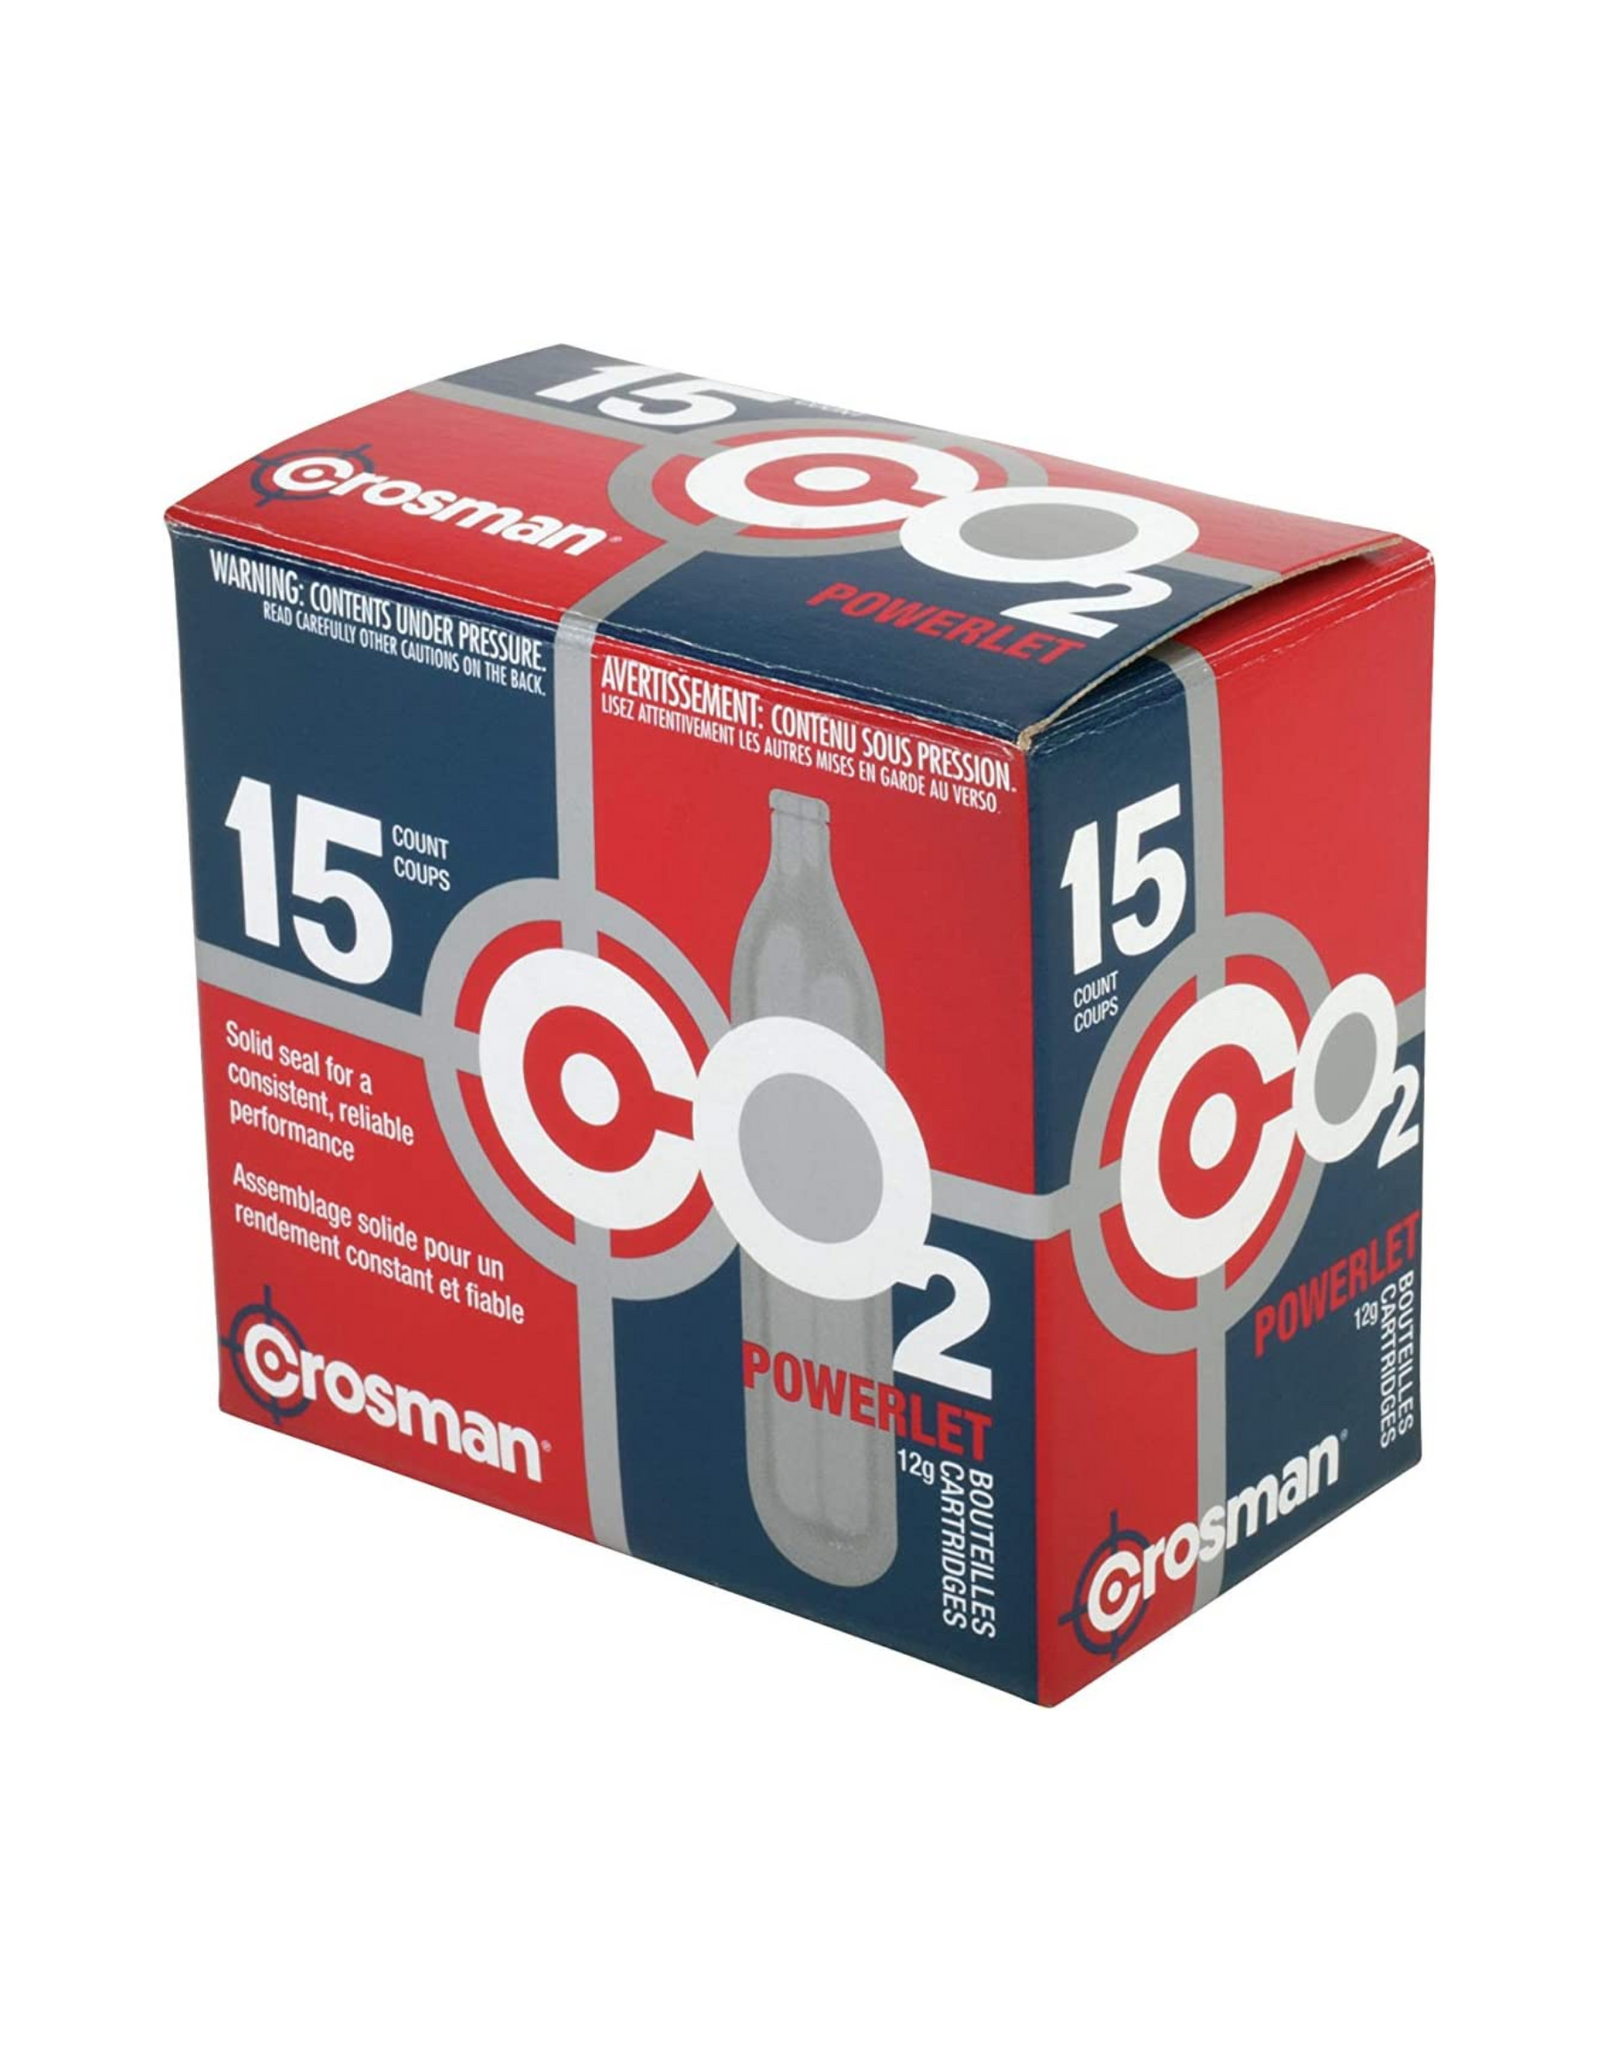 Crosman 12-Gram CO2 Powerlet Cartridges, 25 Count